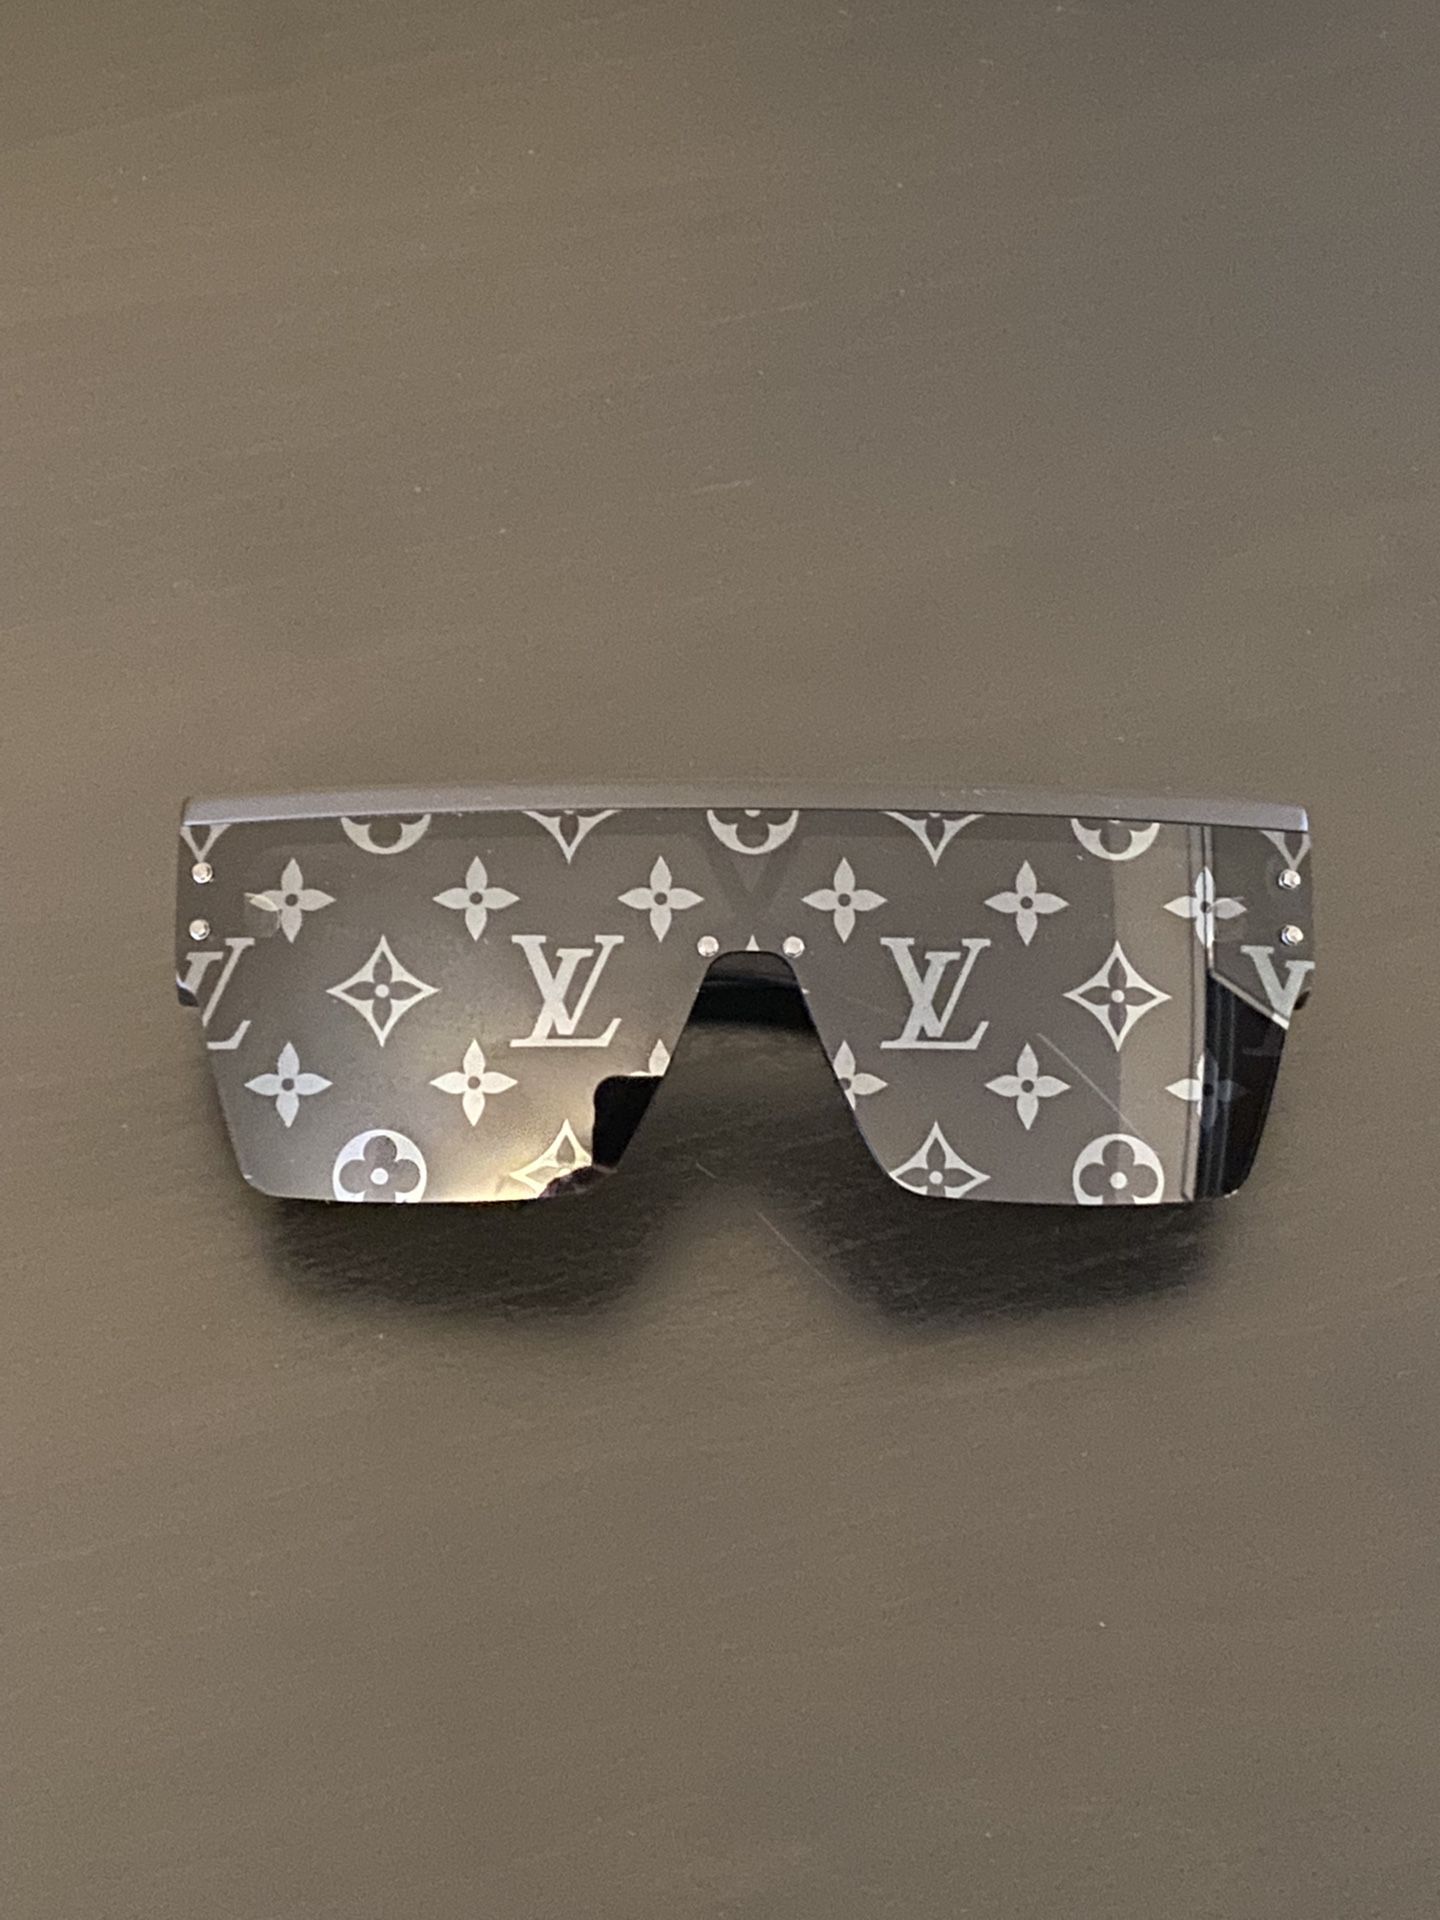 Louis Vuitton Waimea L Sunglasses